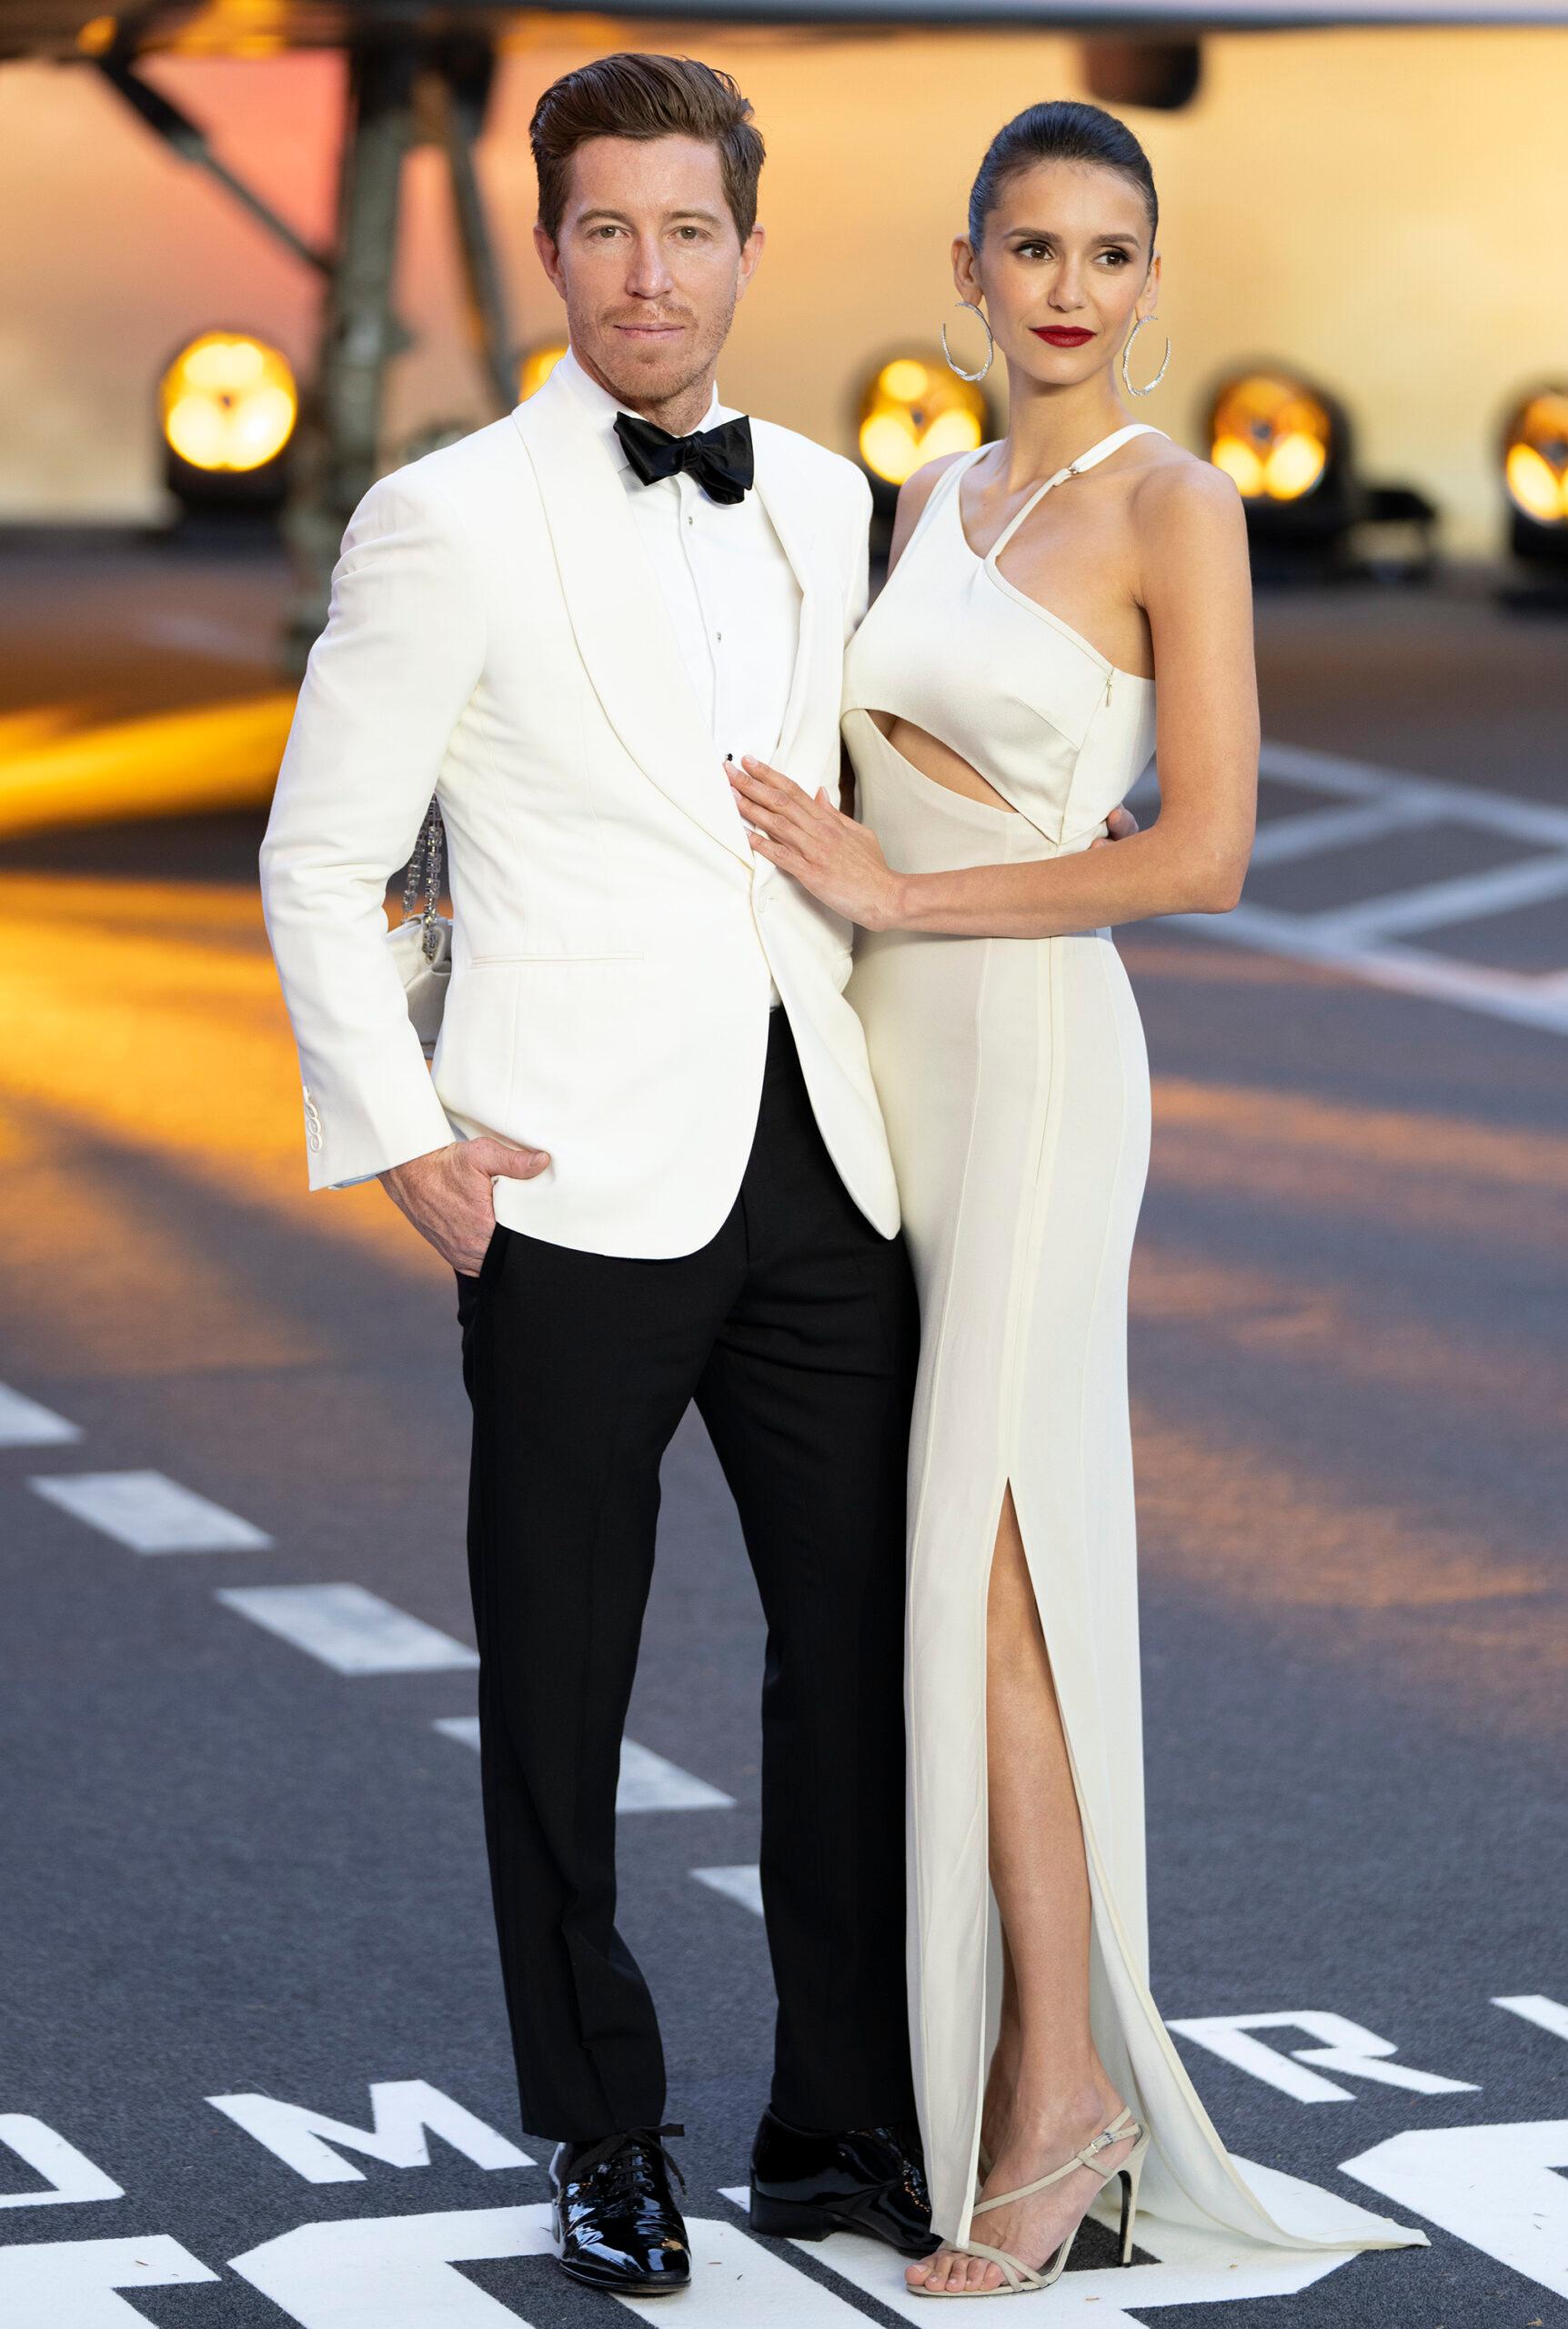 Nina Dobrev, Shaun White Ready to Get Engaged in 2023: Details